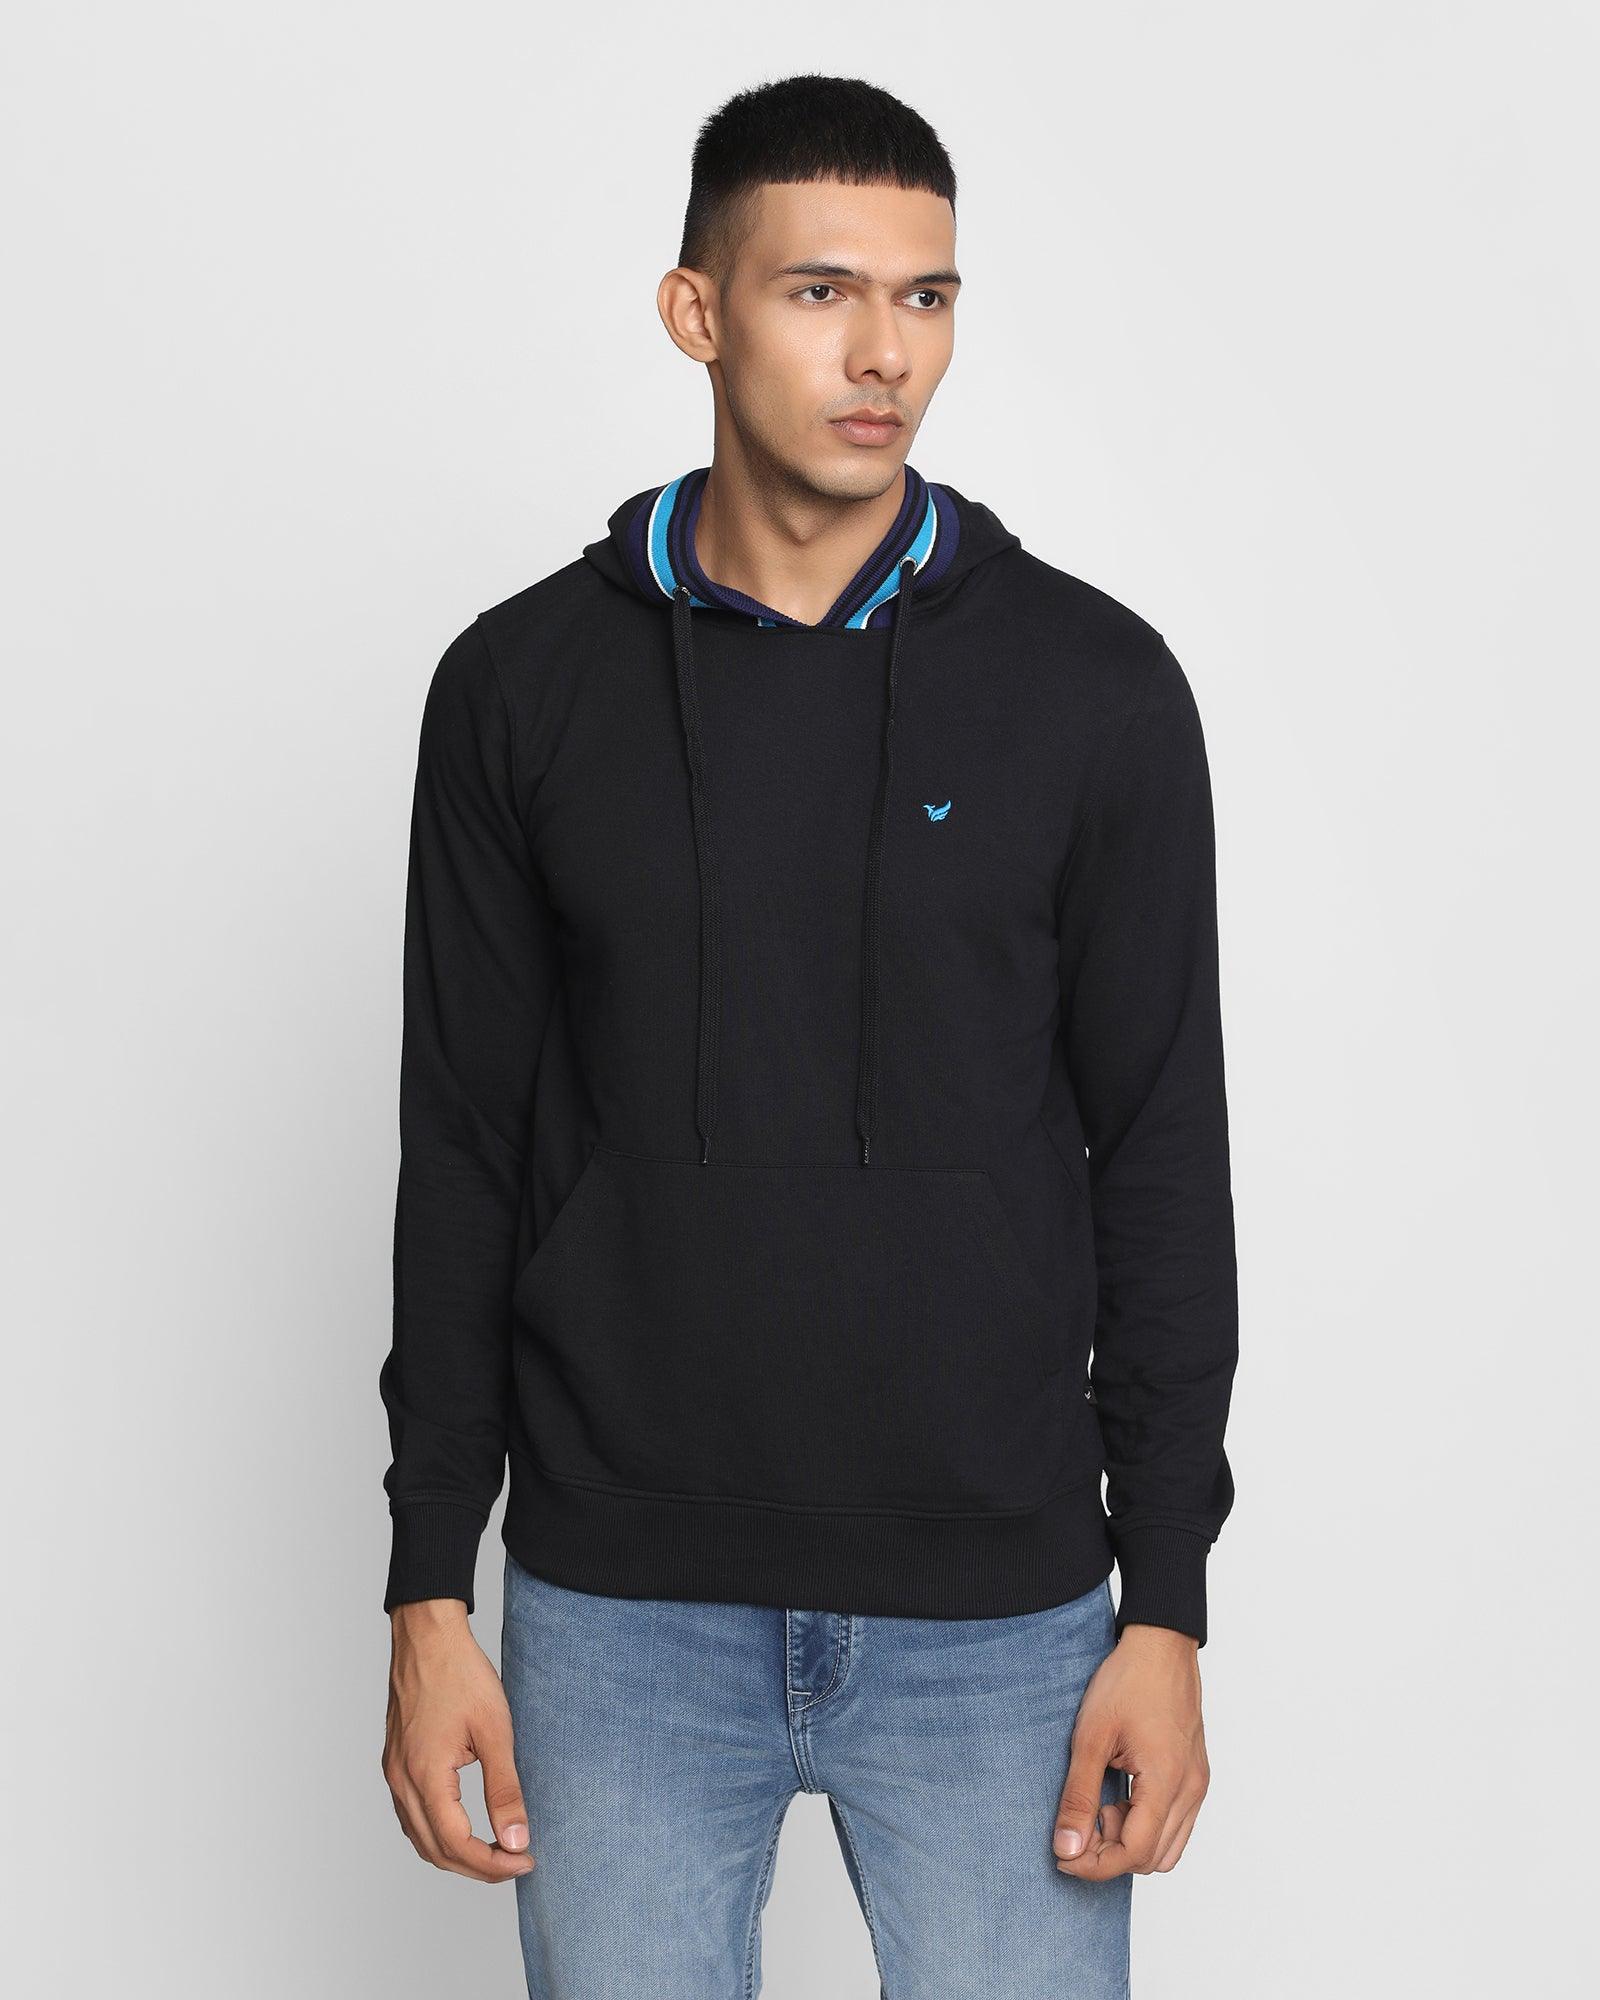 Hoodie Solid Sweatshirt Colton For Men By Blackberry